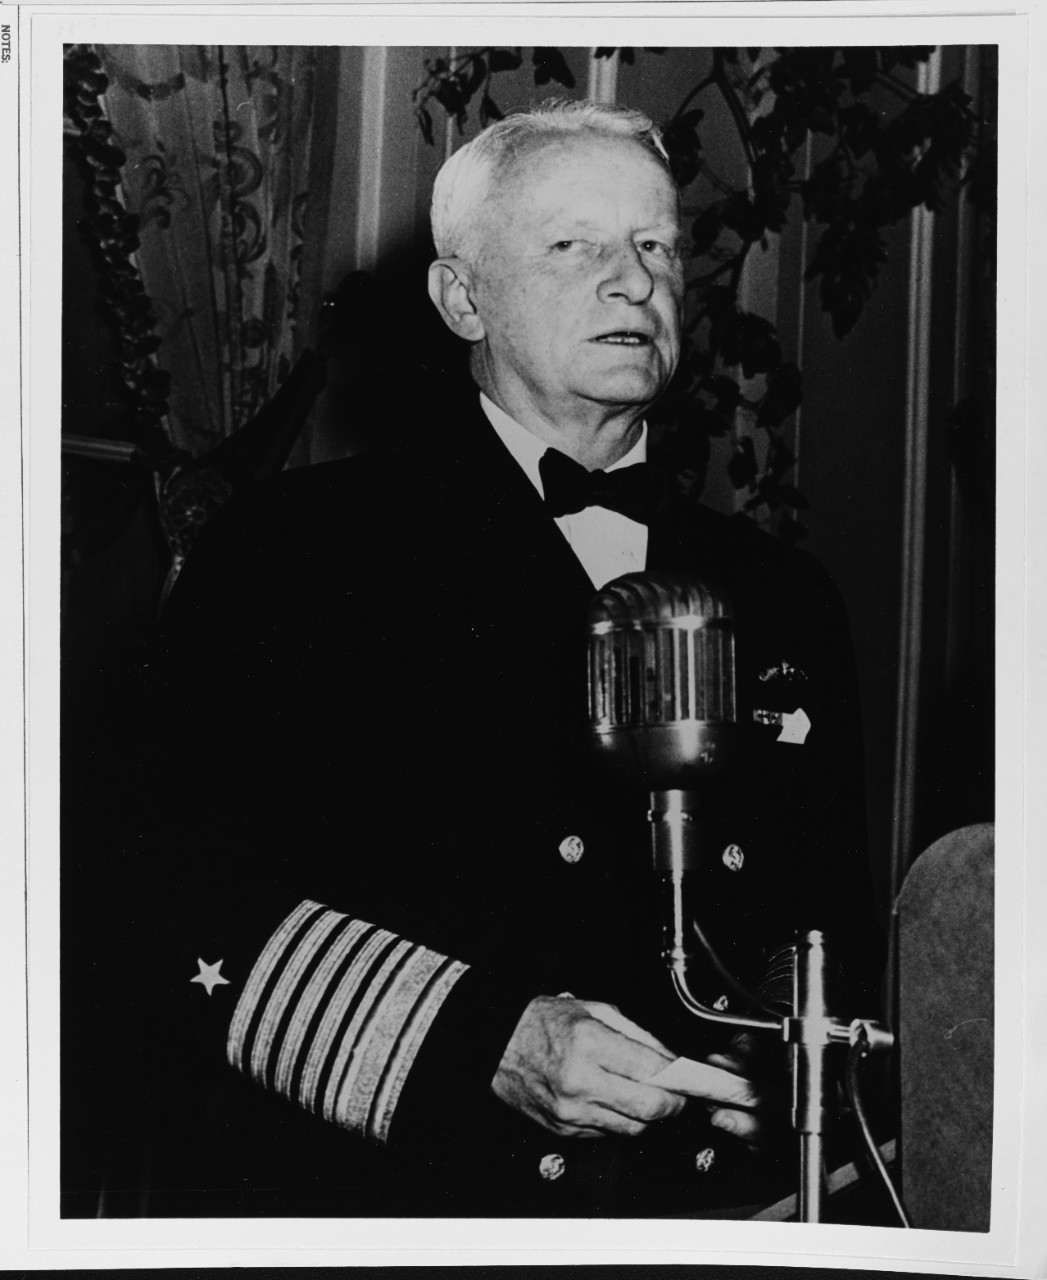 Fleet Admiral Nimitz Speaks at an Anniversary Dinner